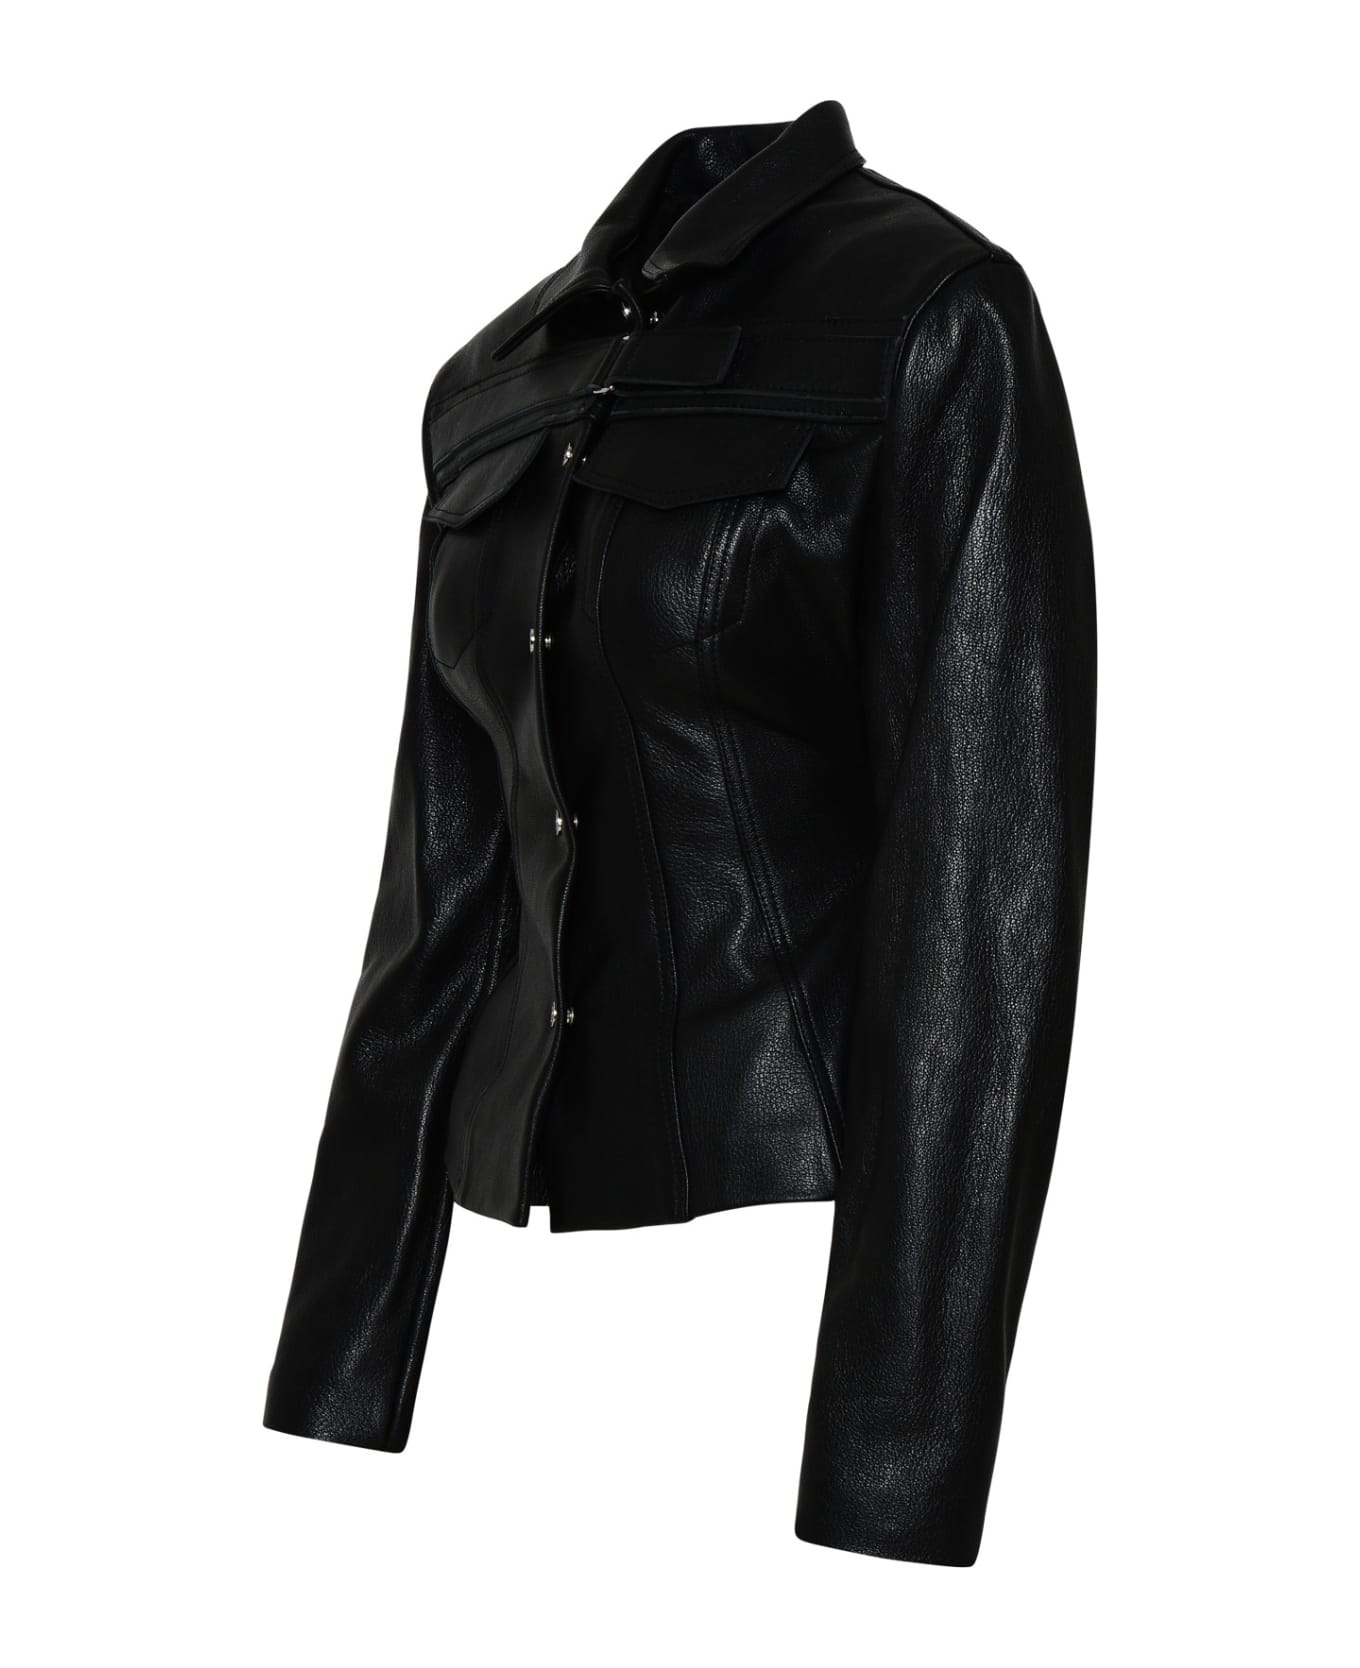 David Koma Black Leather Jacket - Black